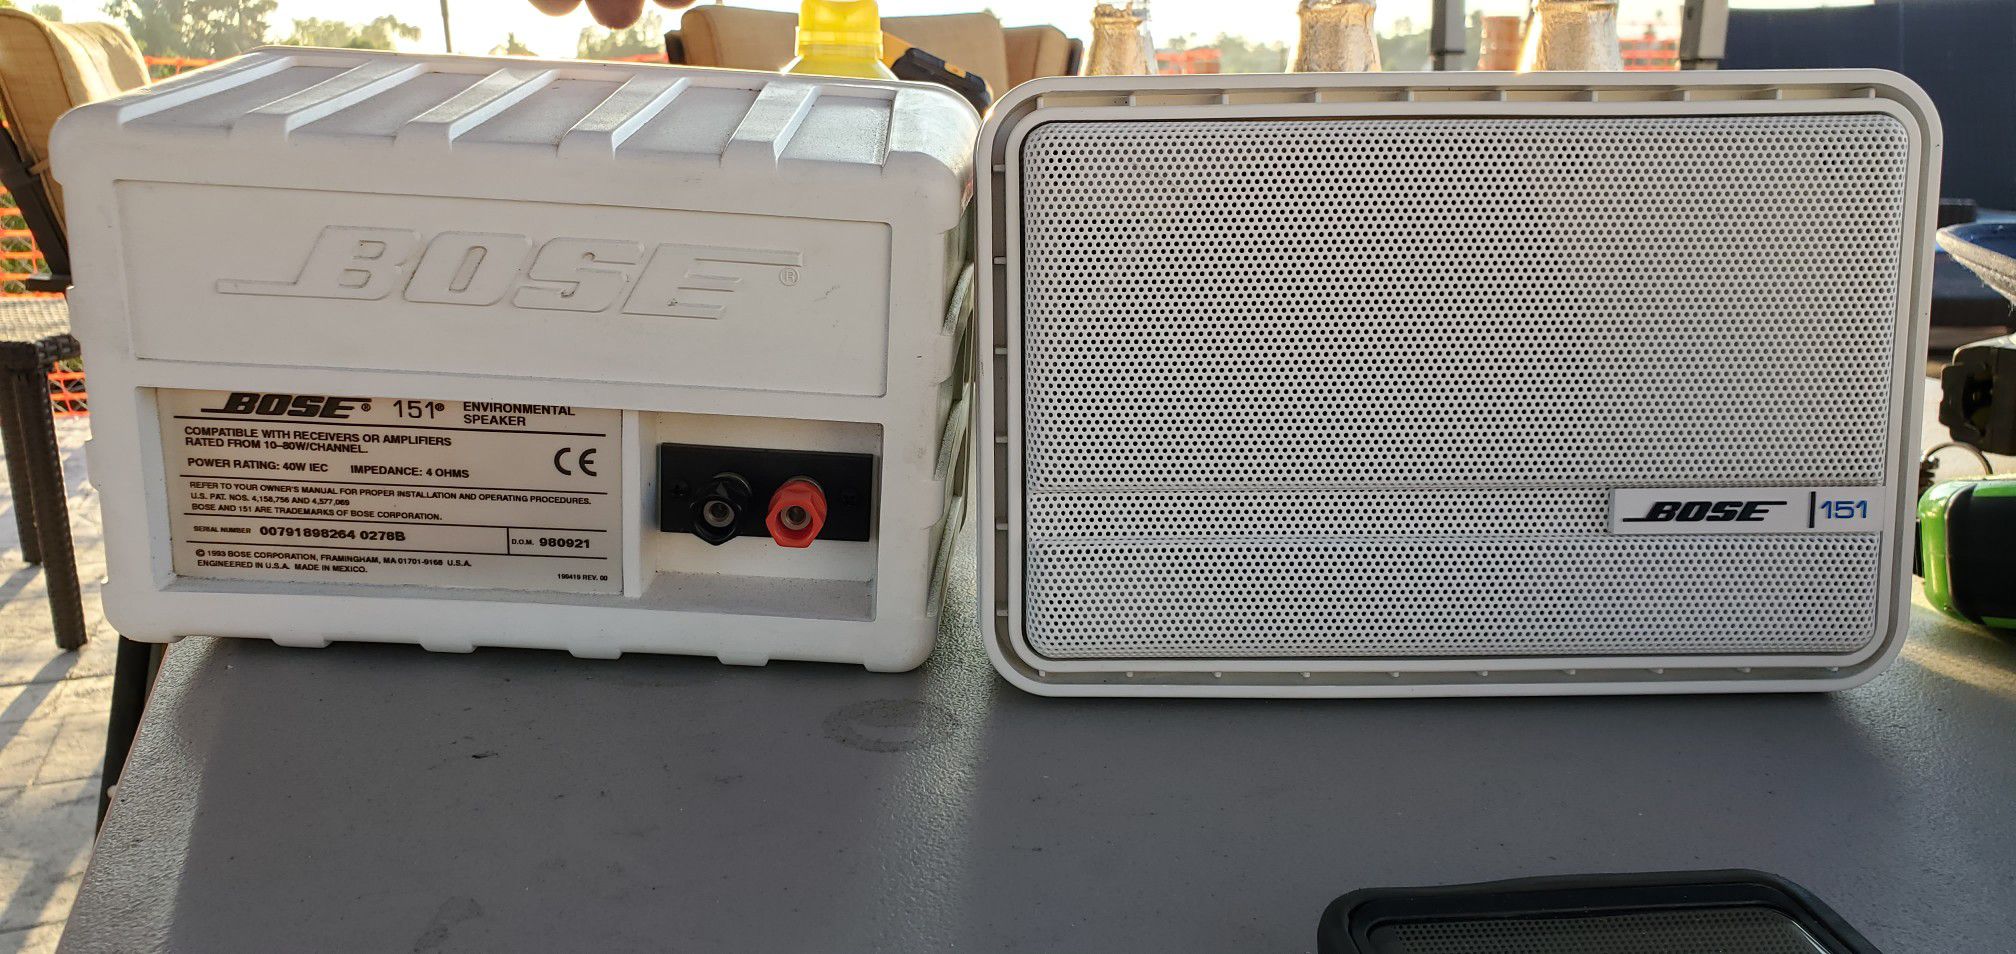 Bose 151 outdoor speakers